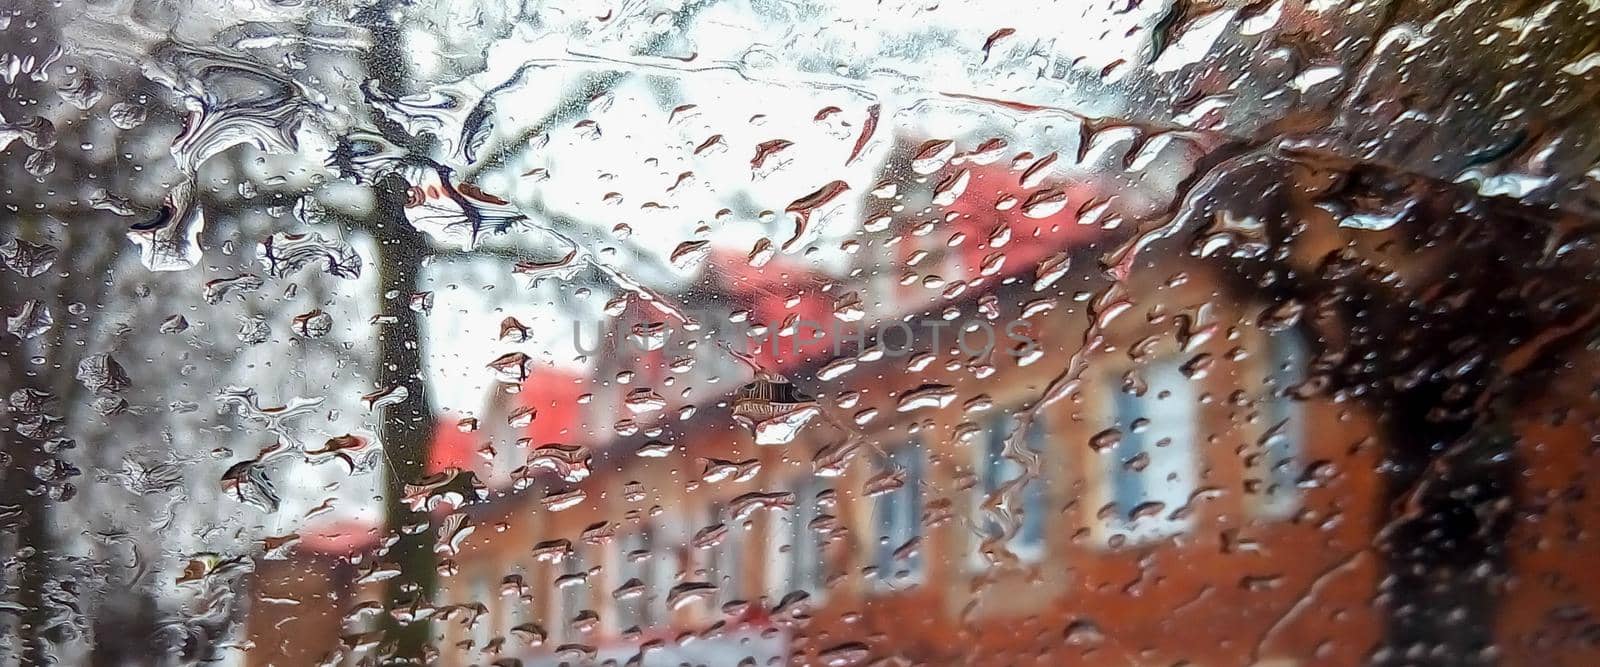 Raindrops on window glass. Rainy city background.